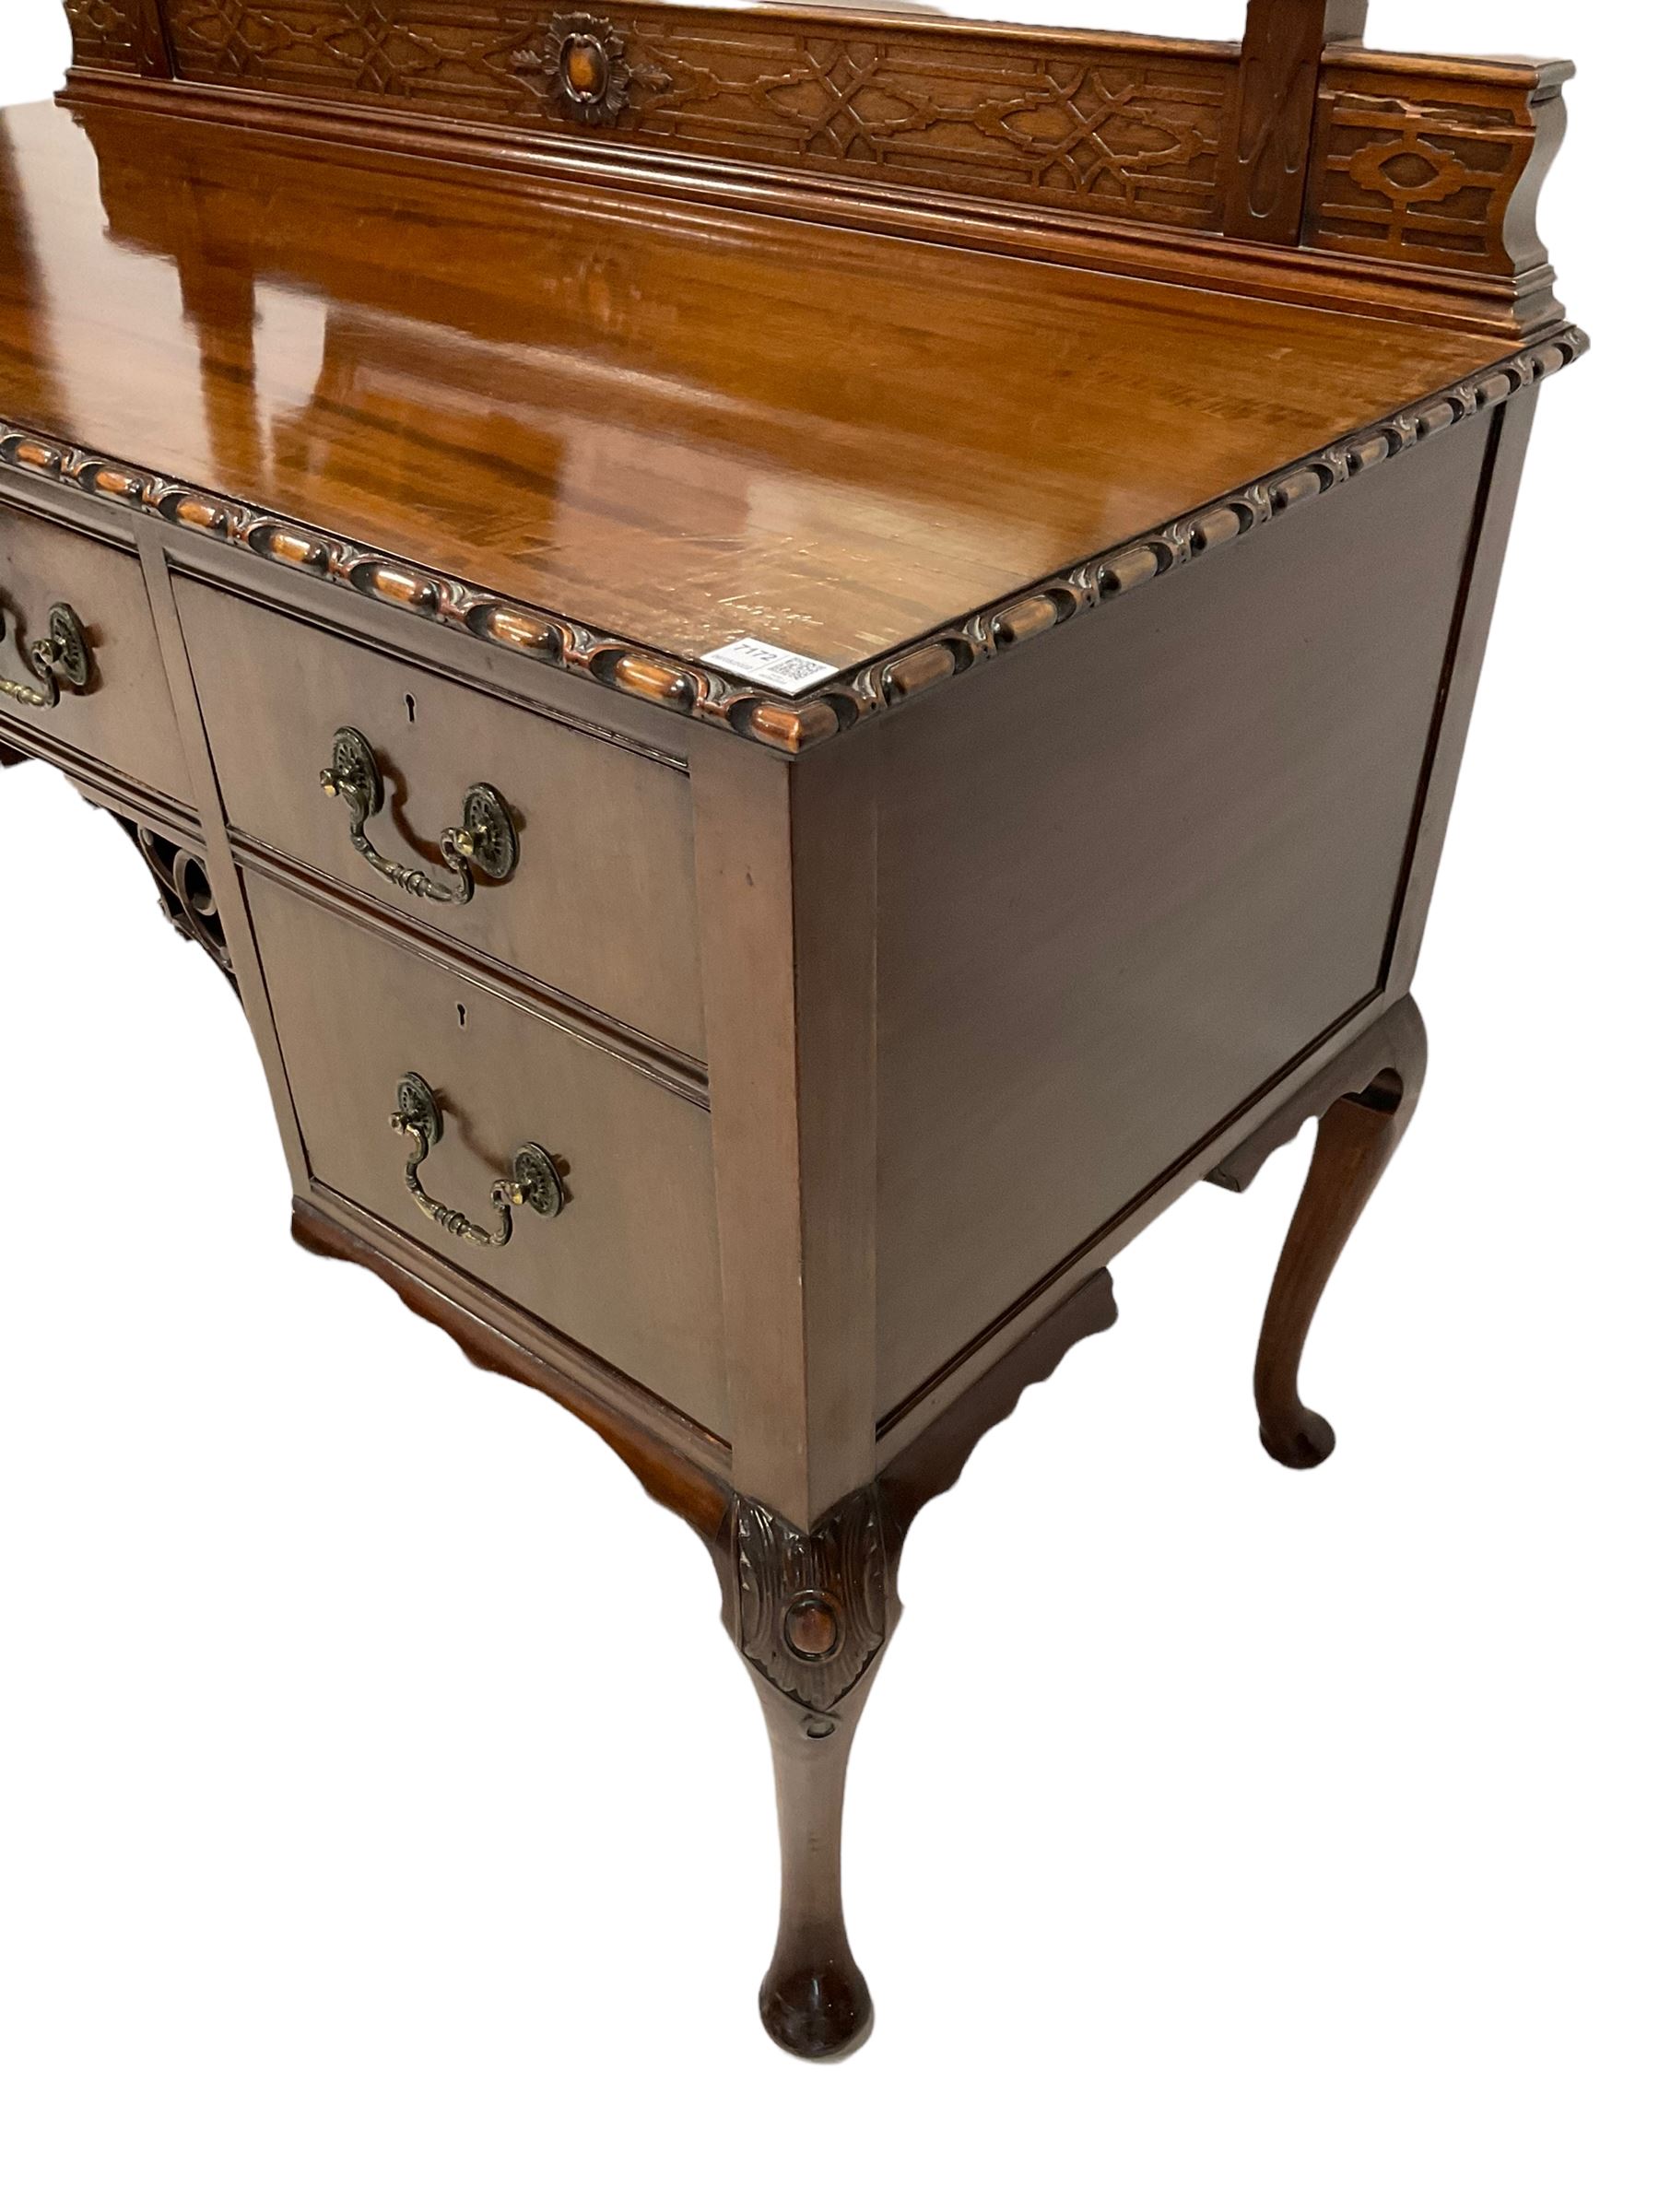 20th century mahogany dressing table - Image 6 of 6